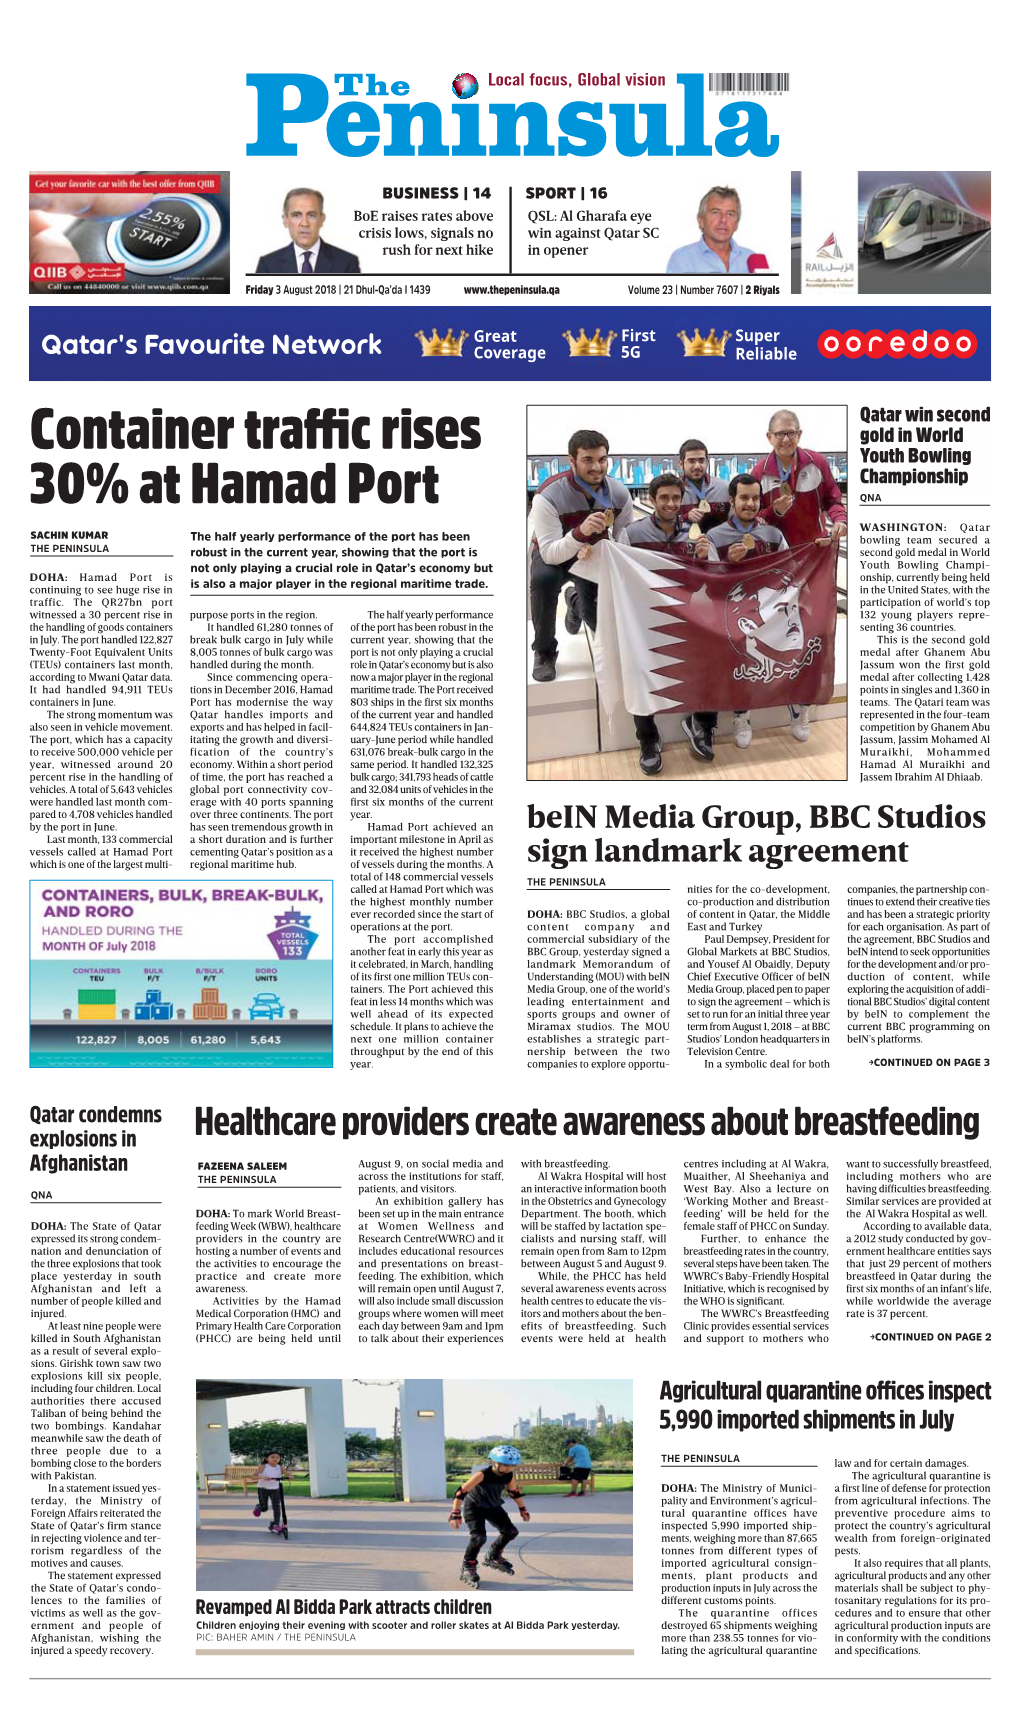 Container Traffic Rises 30% at Hamad Port